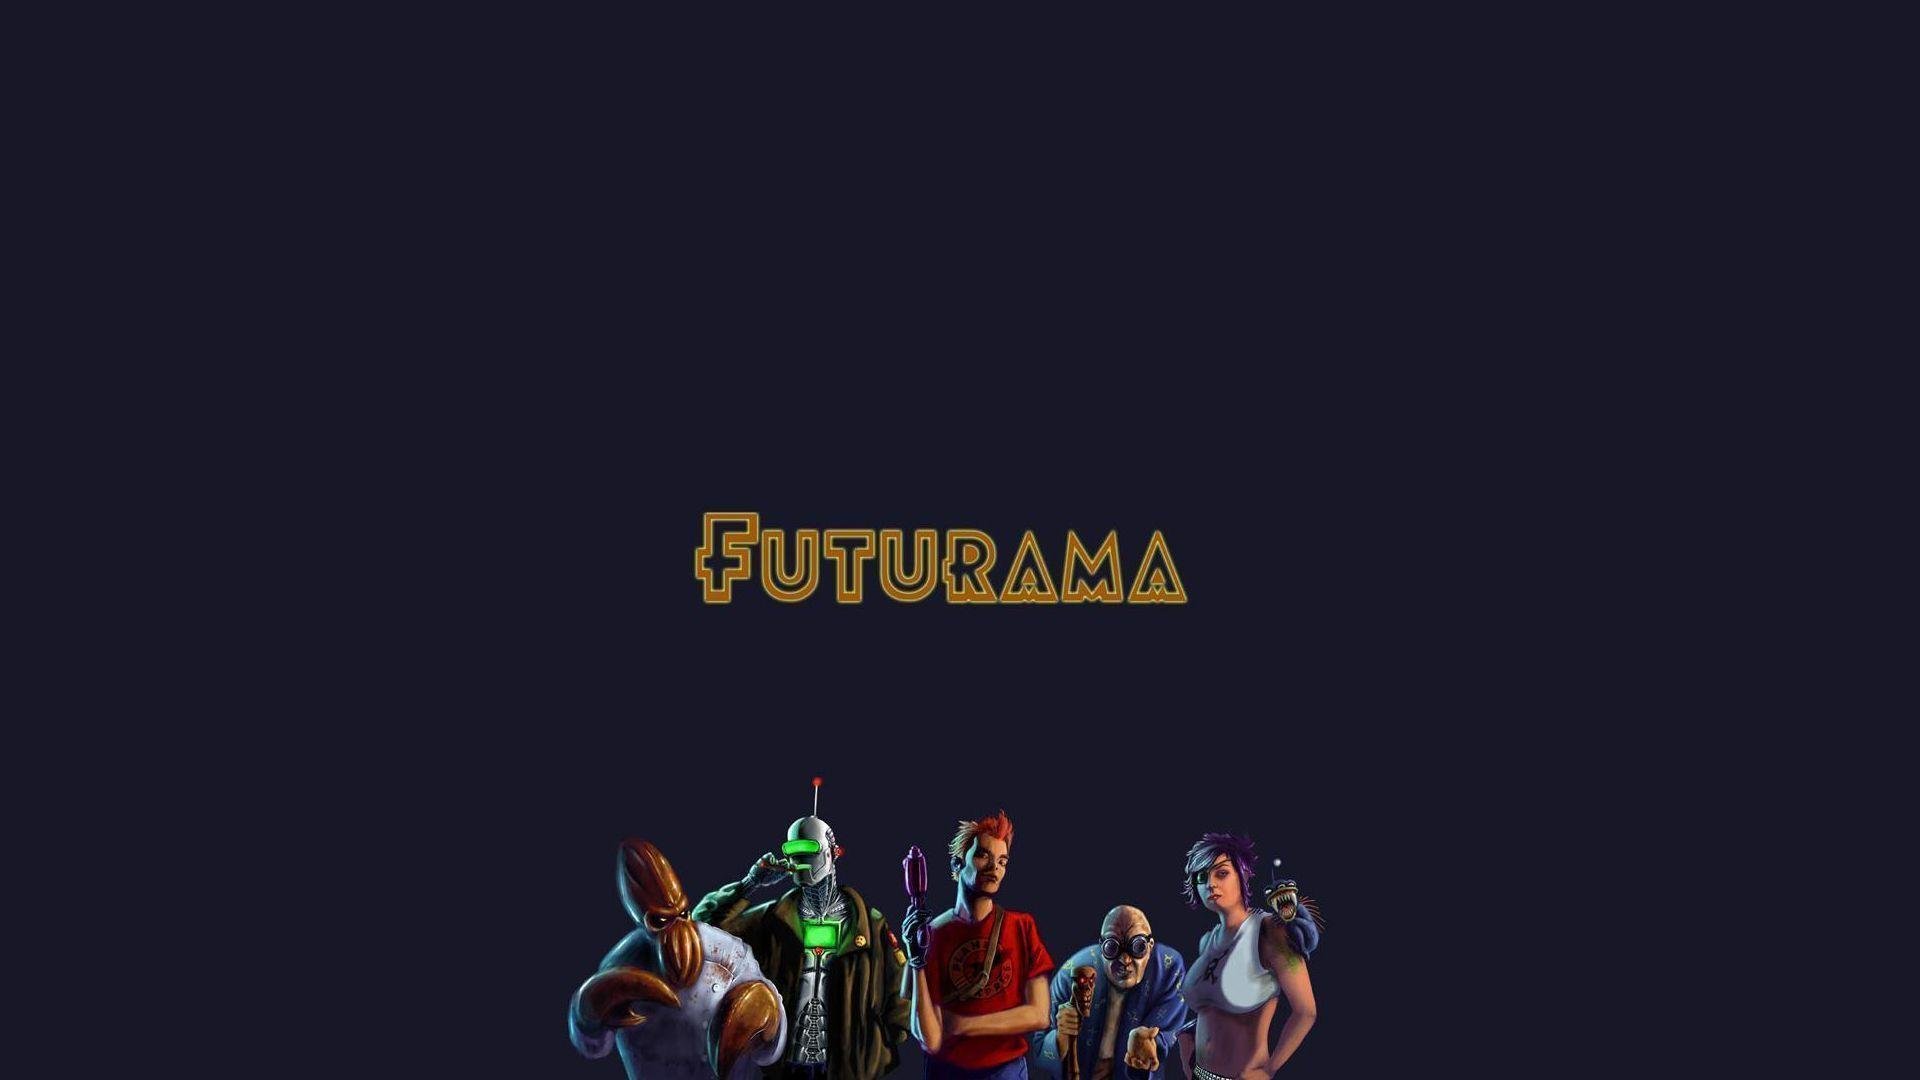 Futurama Computer Wallpaper, Desktop Background 1920x1080 Id: 89380